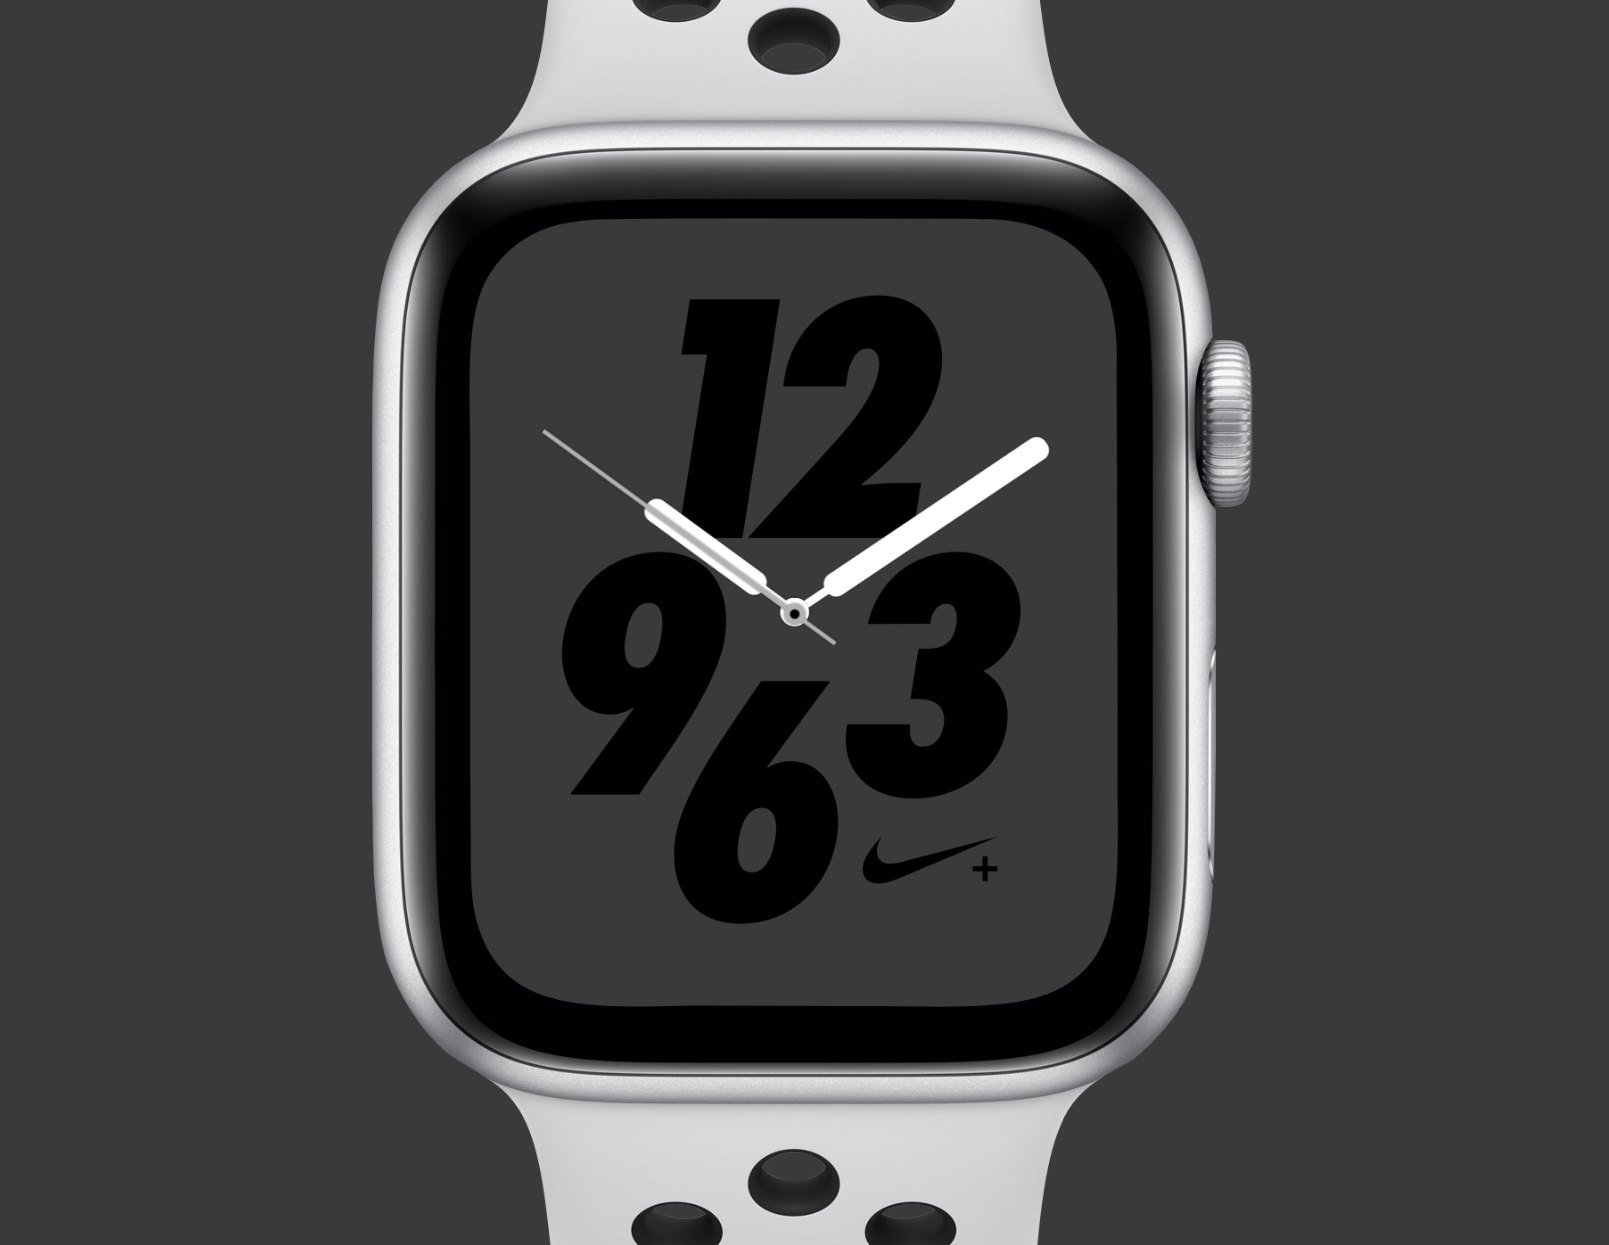 Заставка часов как на айфоне. Эппл вотч 7 Nike. Циферблаты найк для Эппл вотч. Циферблат часов Apple IWATCH 7 найк. Apple watch Nike Series 7 GPS.